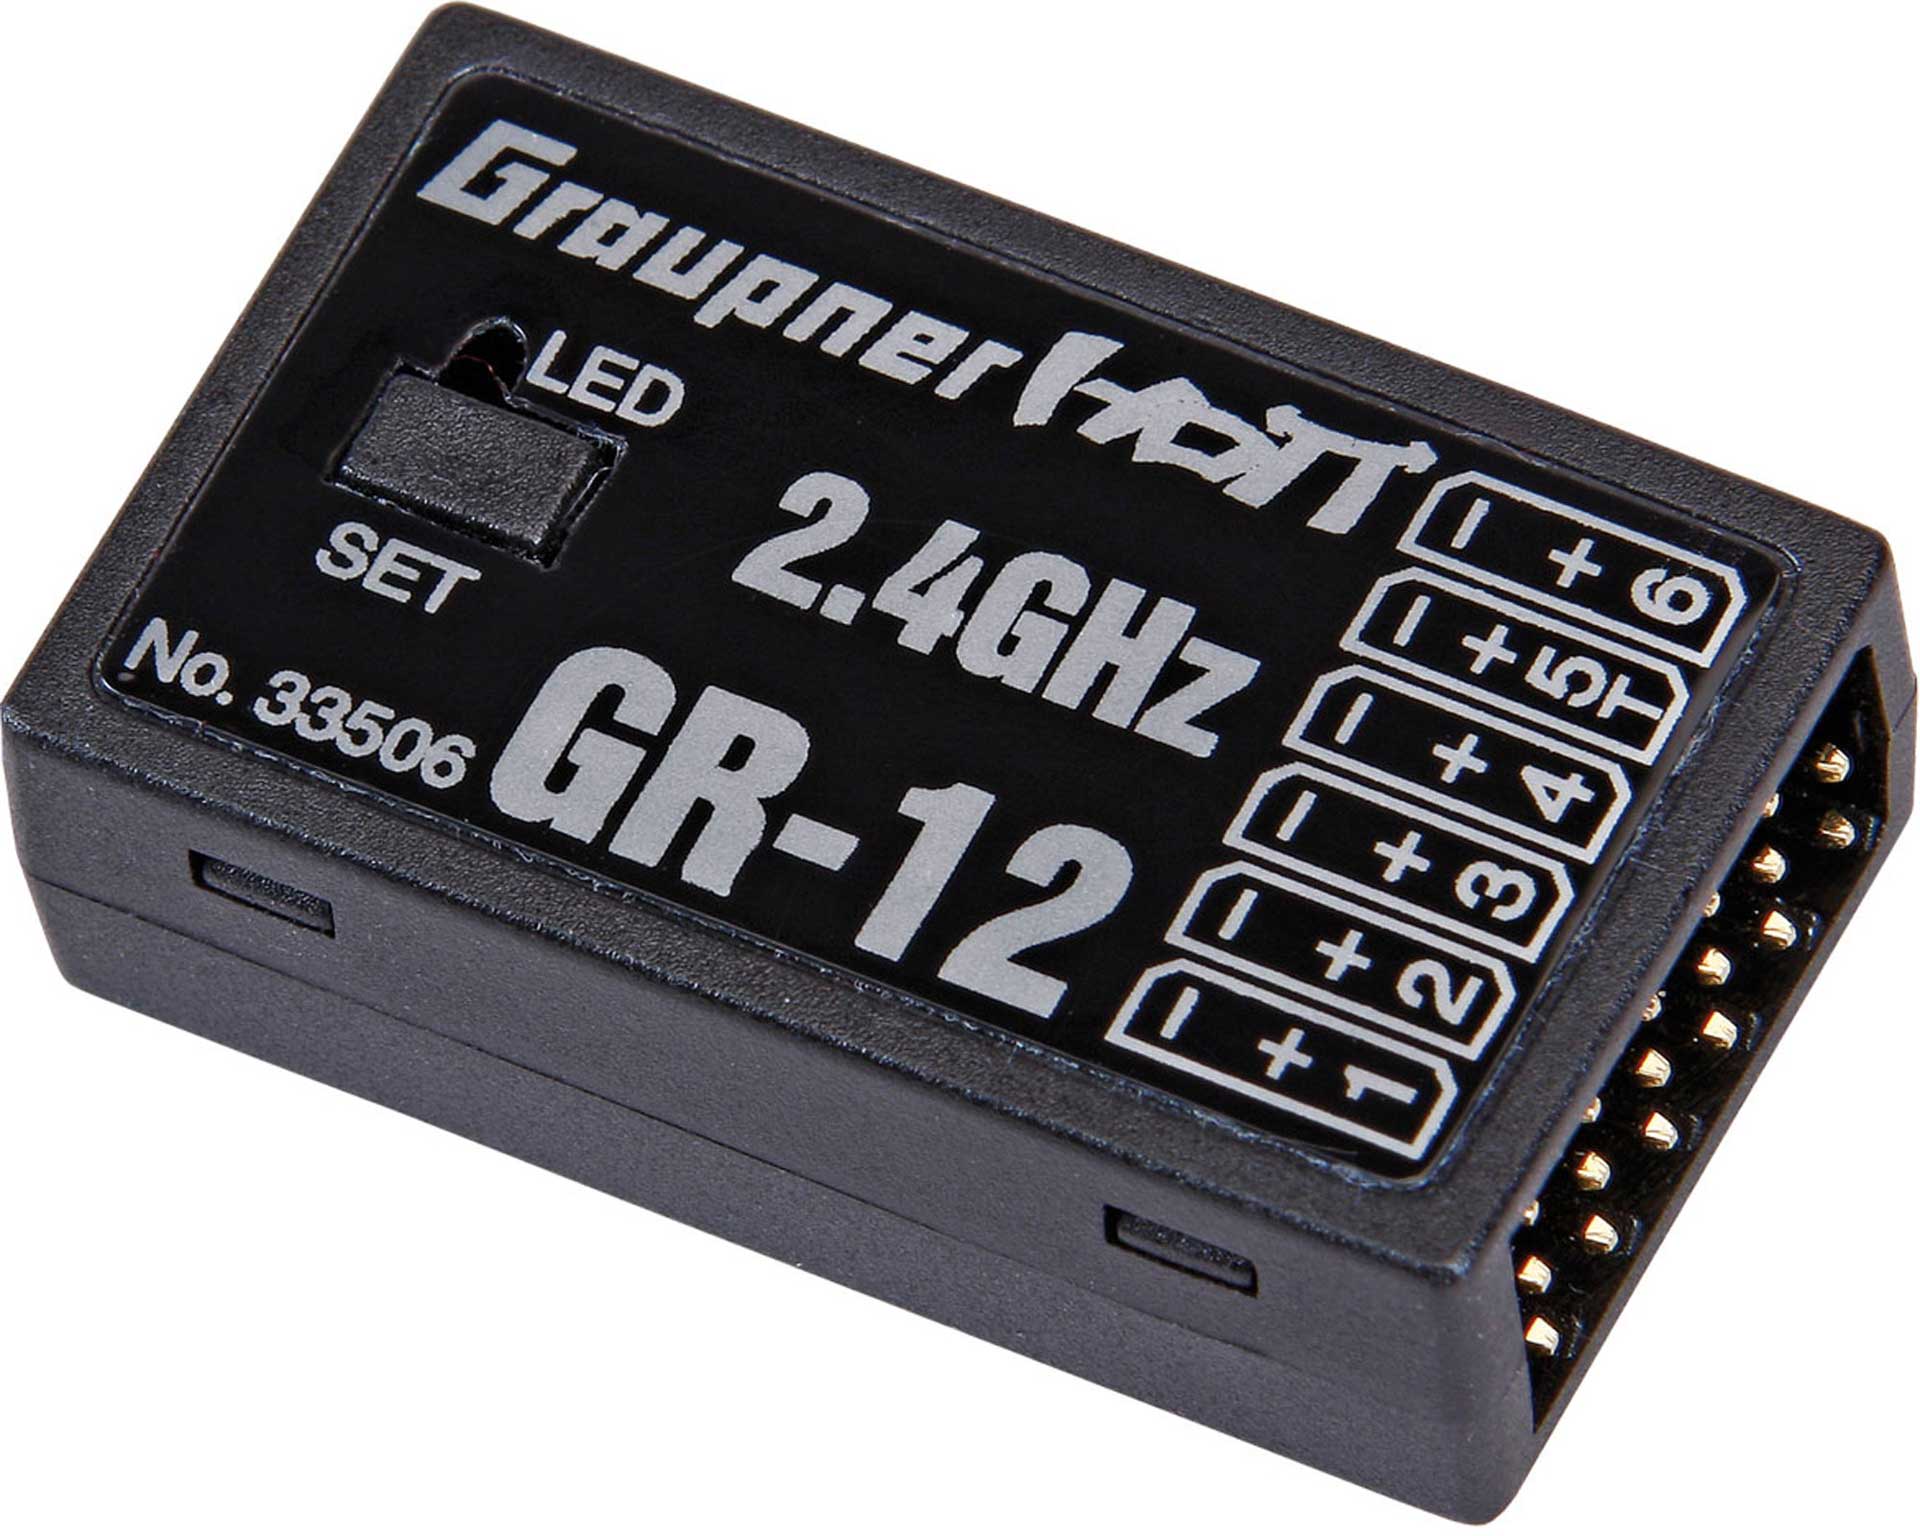 GRAUPNER GR-12 2.4GHZ HOTT 6K RECEIVER